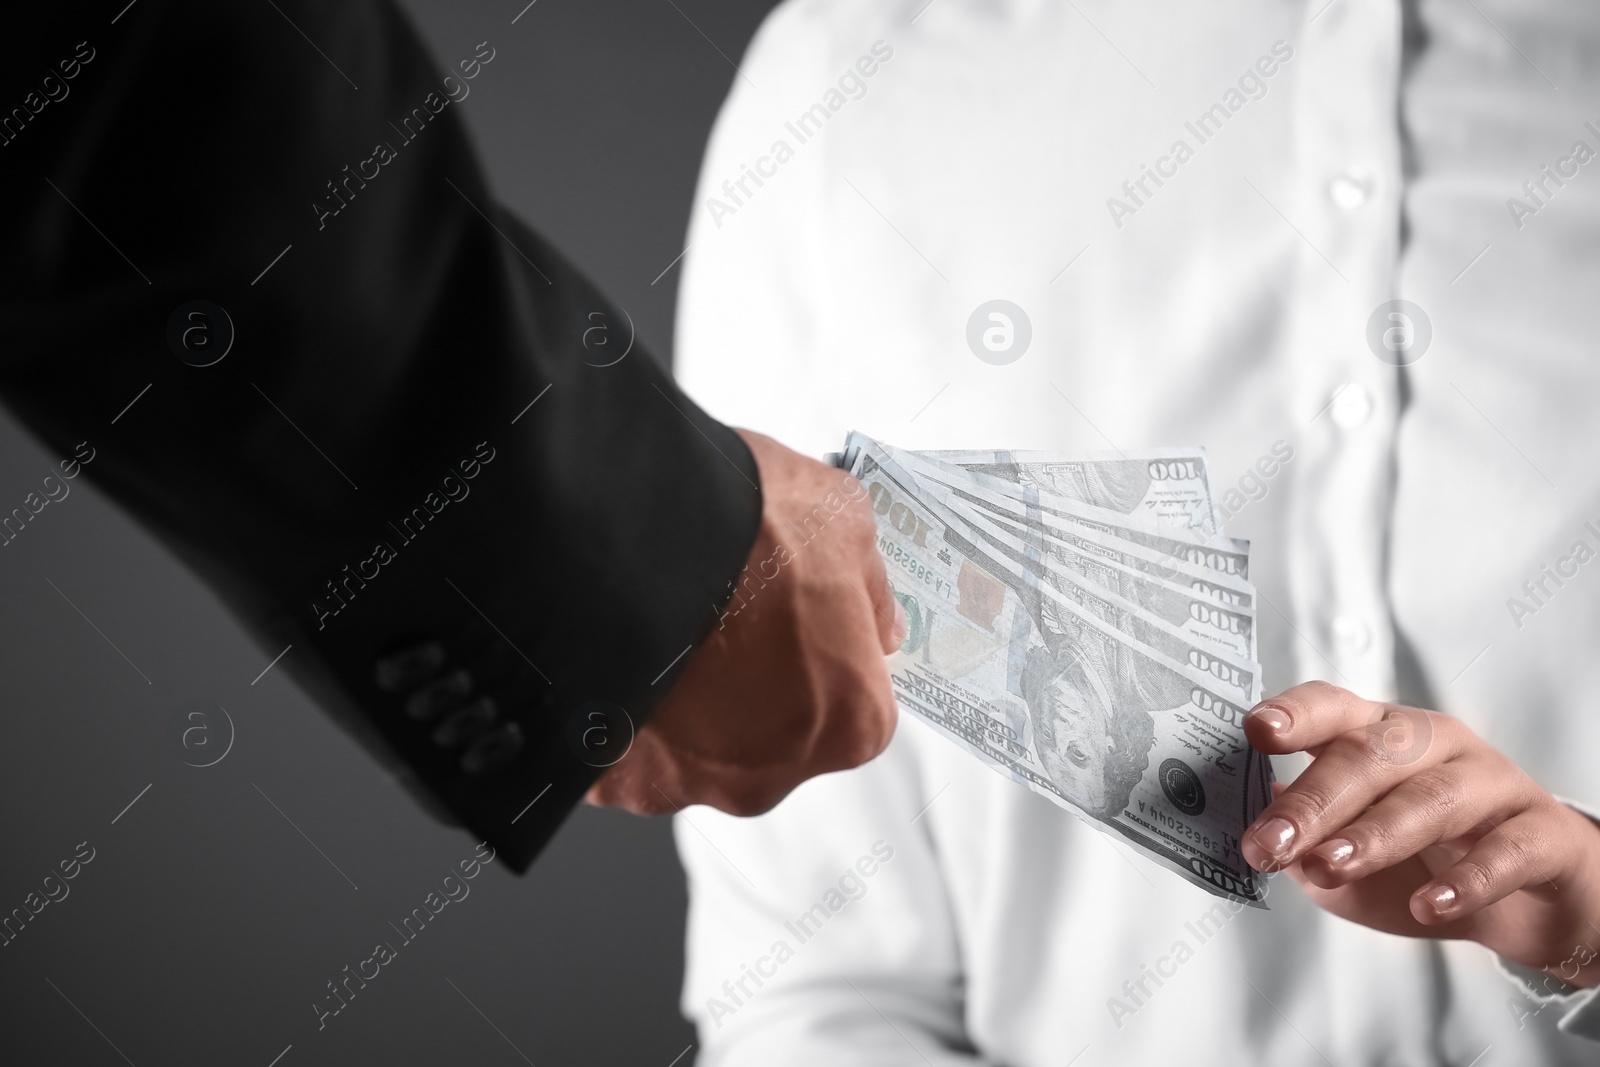 Photo of Man giving bribe money to woman on dark background, closeup